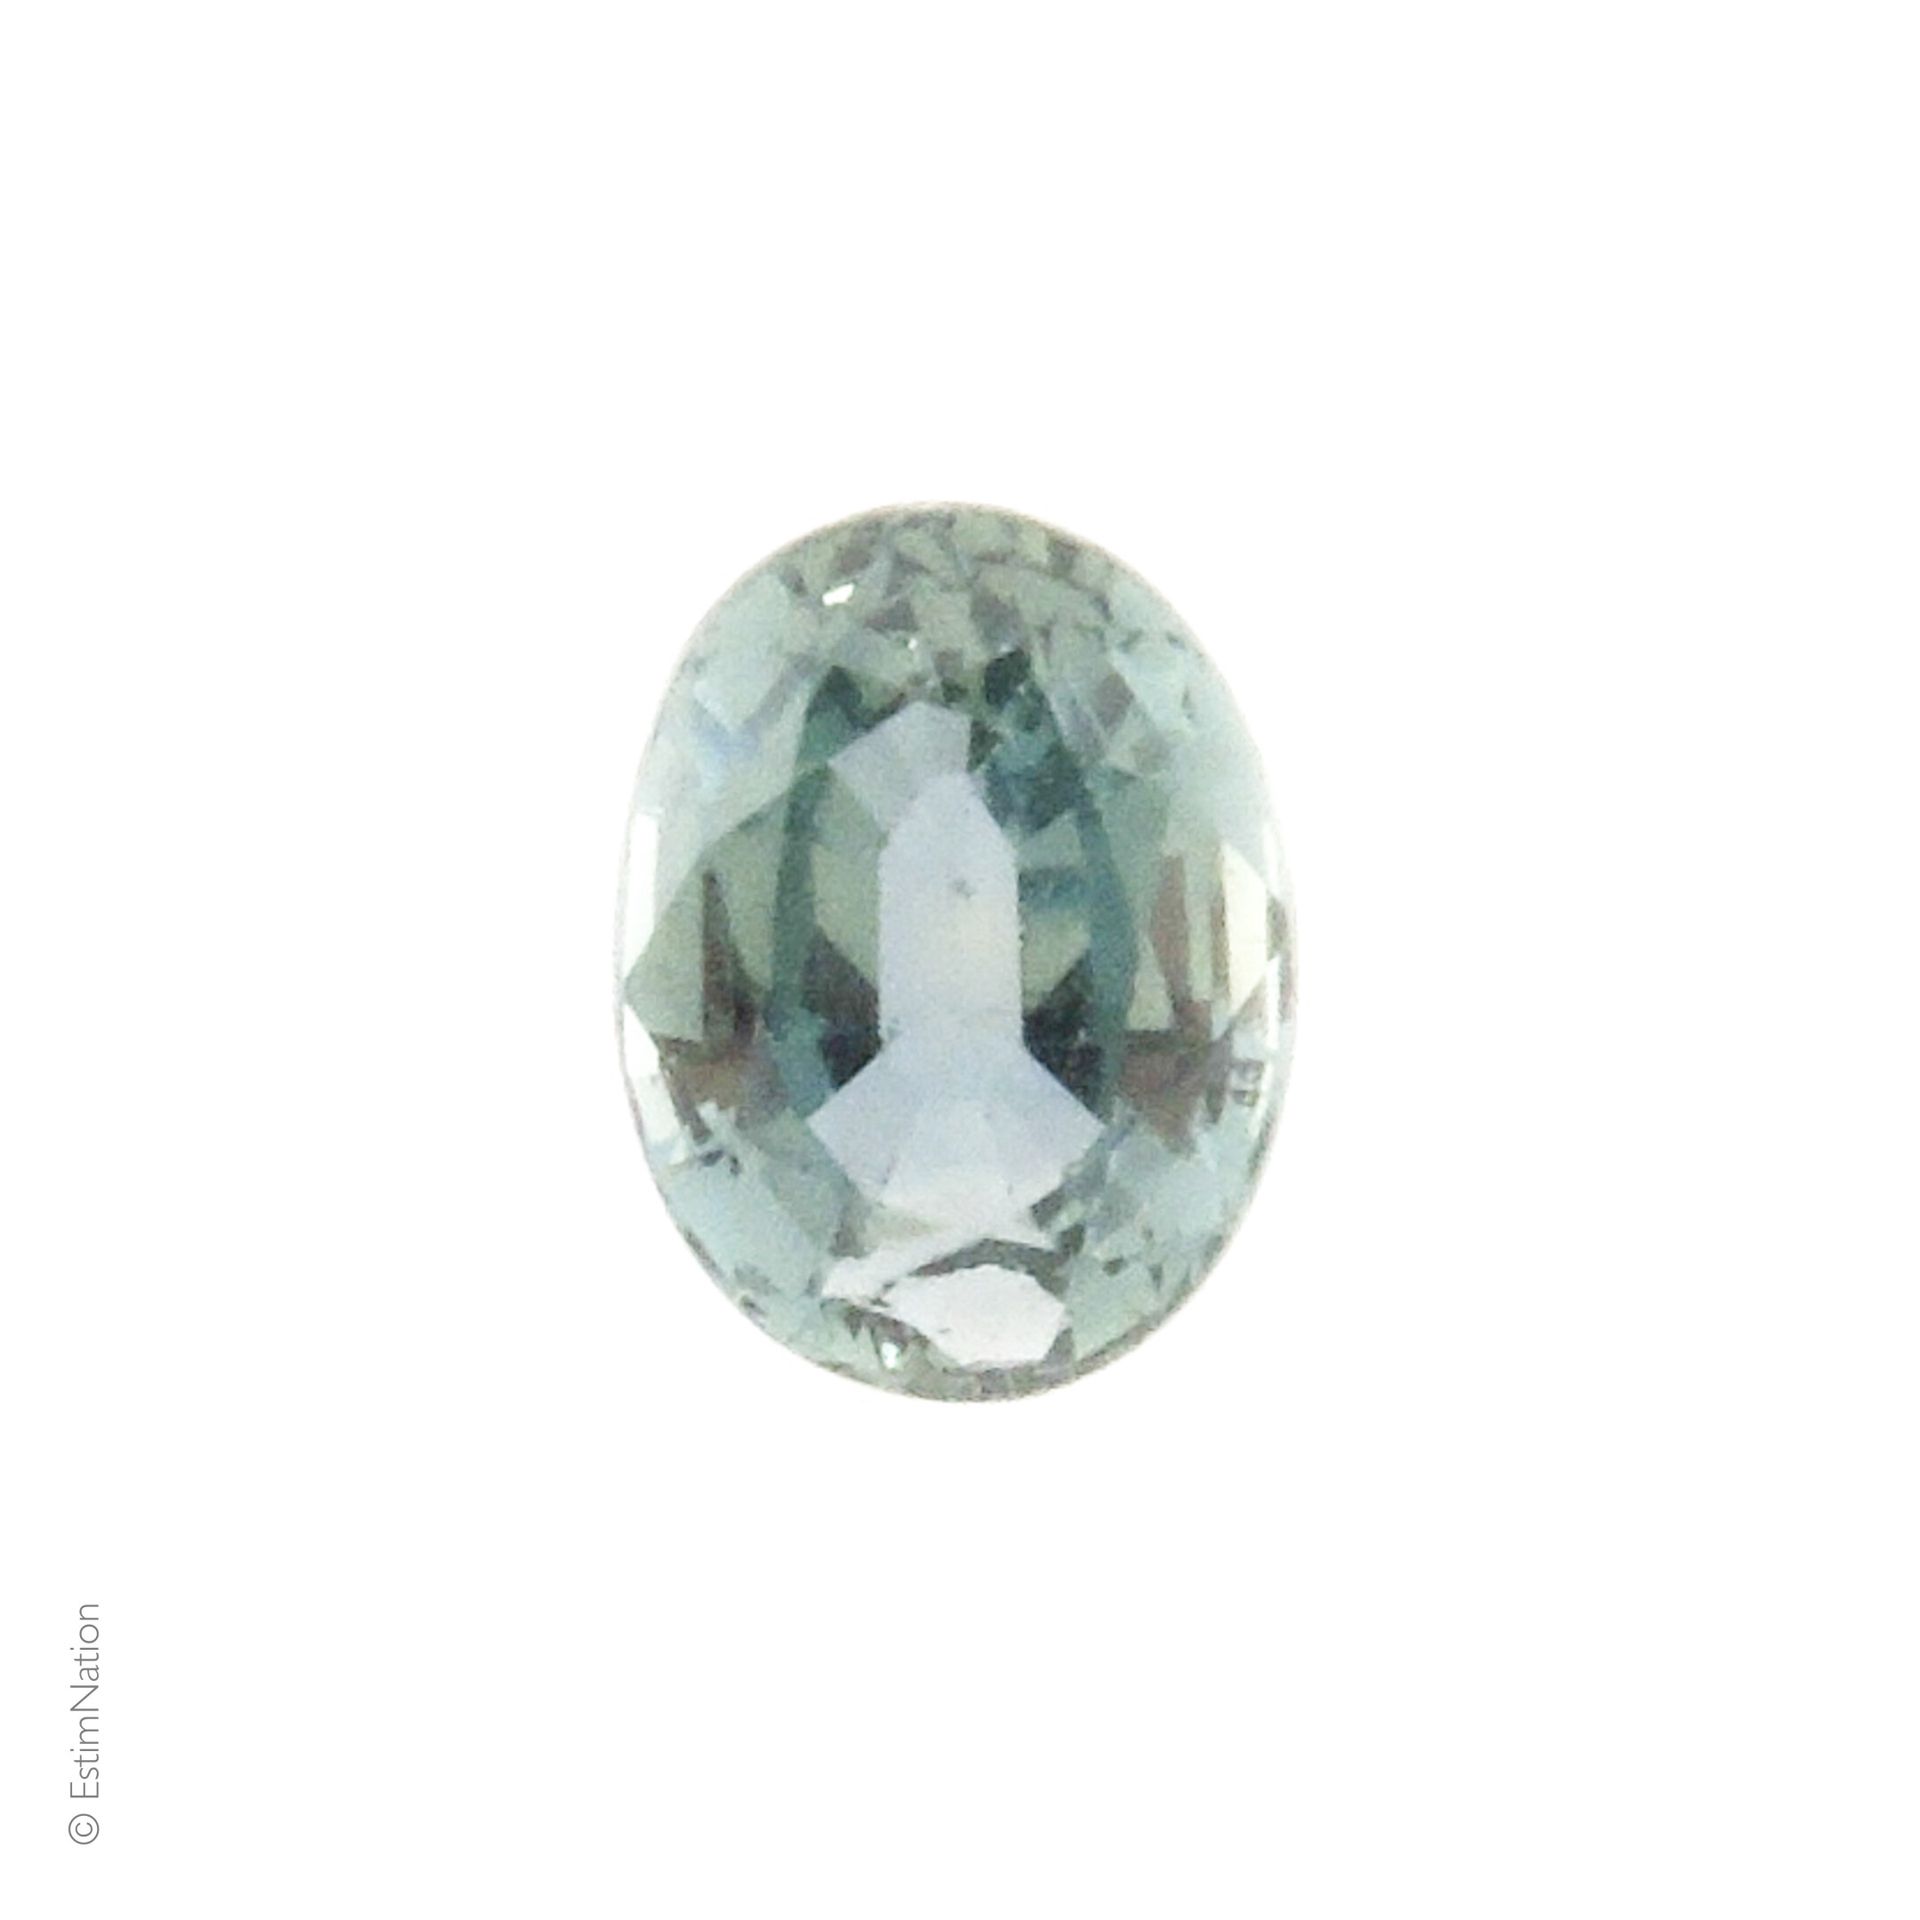 SAPHIR 1.02 CARAT 天然切面的蓝绿色椭圆蓝宝石，重约1.02克拉。

尺寸：6.51 x 4.93 x 3.27毫米。



附有美国国际宝石实&hellip;